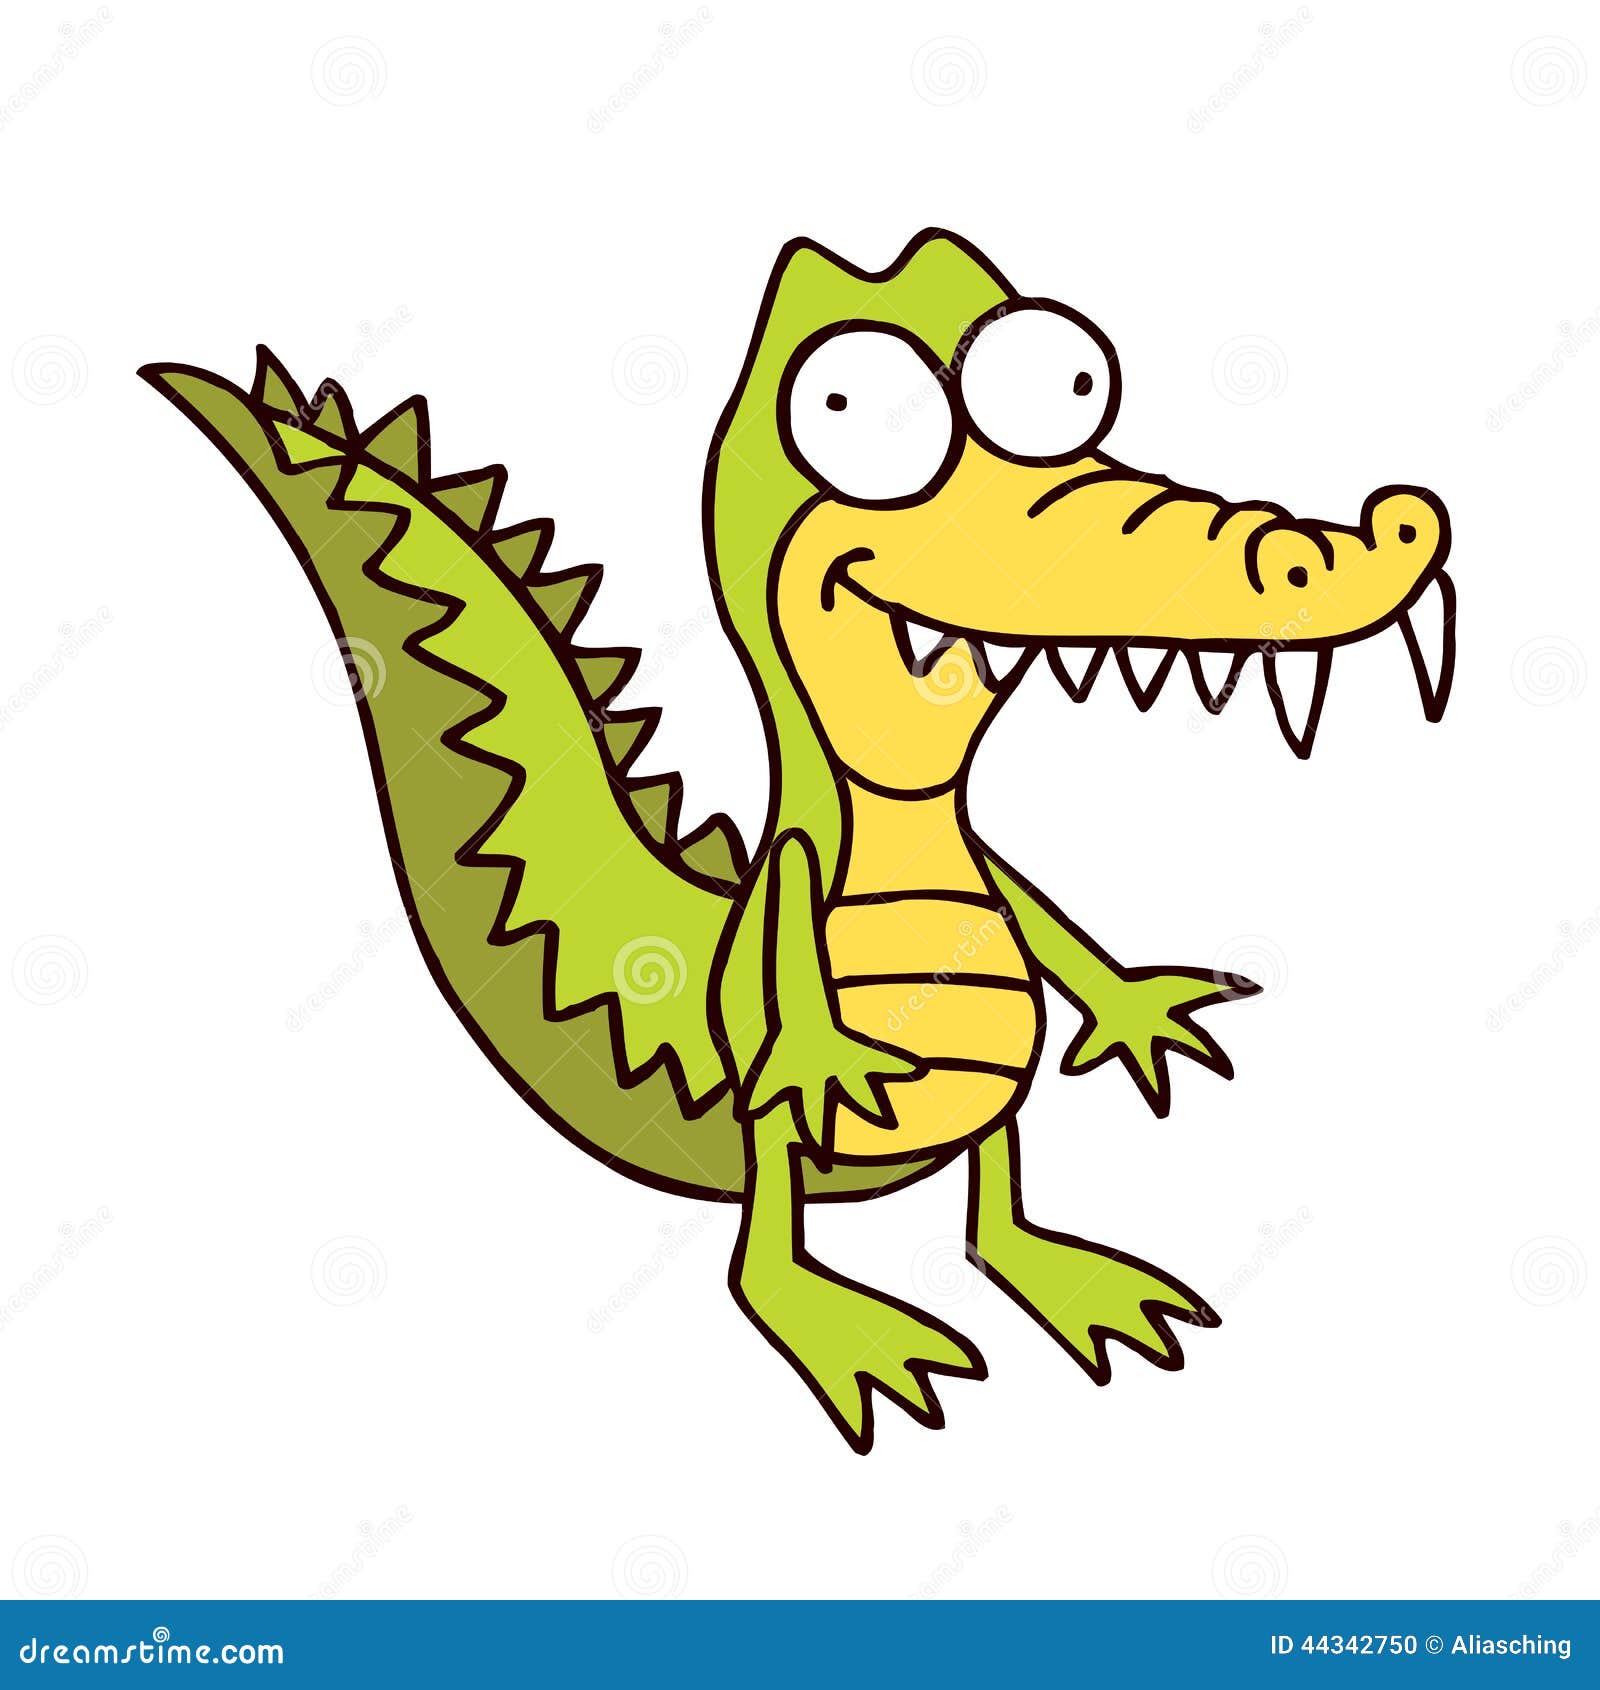 crocodile-cartoon-smiling-alligator-funny-character-hand-drawn-44342750.jpg